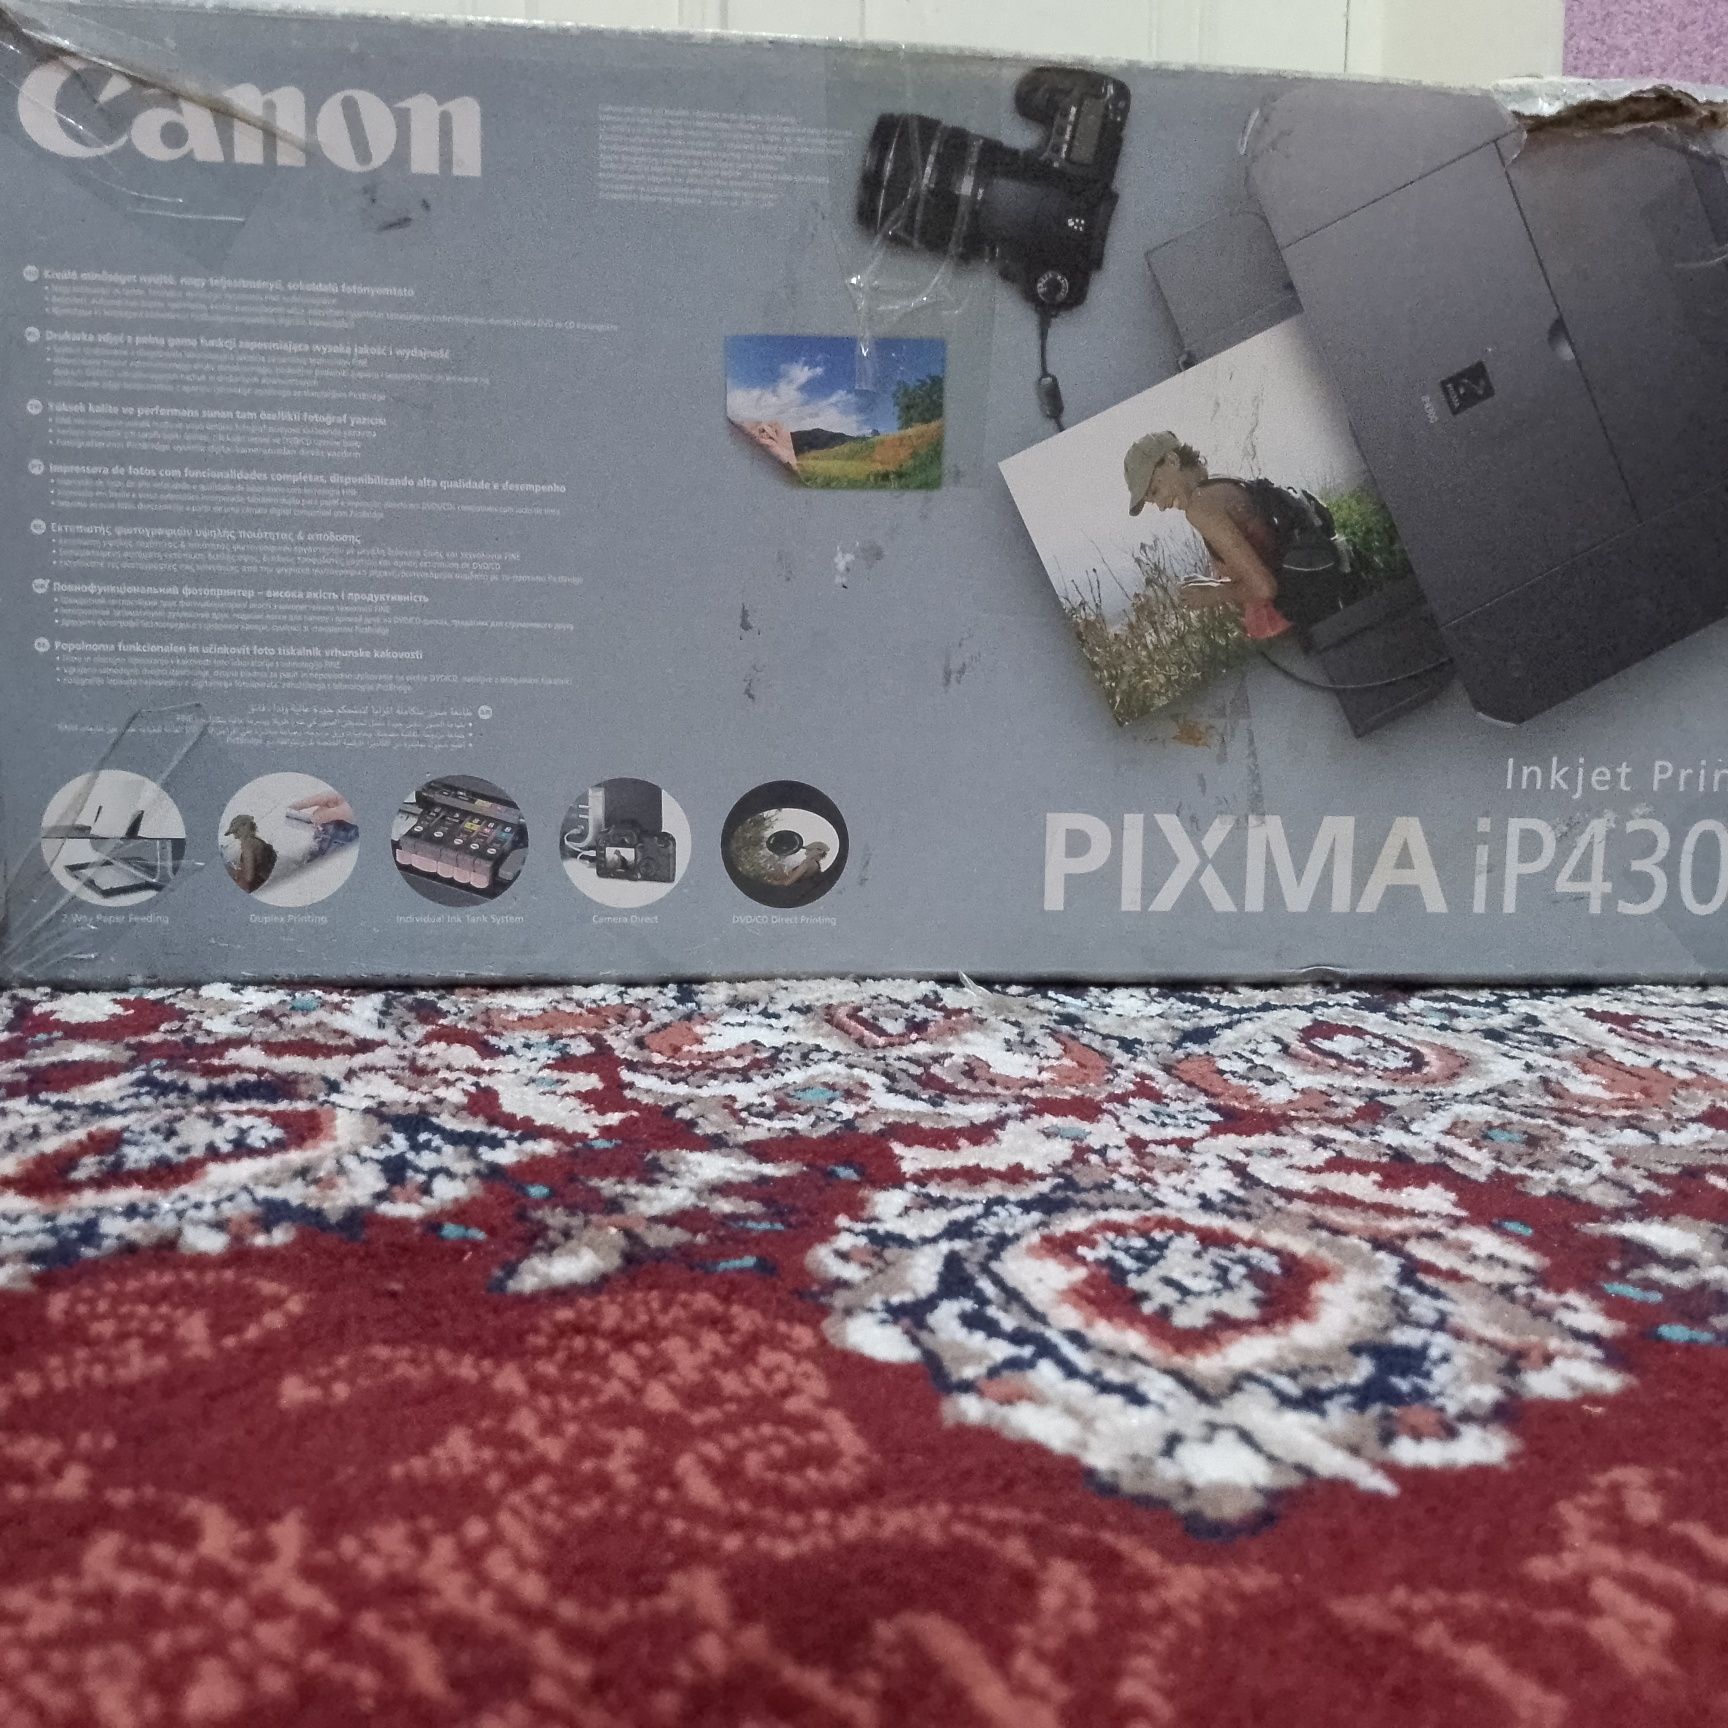 Rossiya  printeri Canon pixma ip 4300